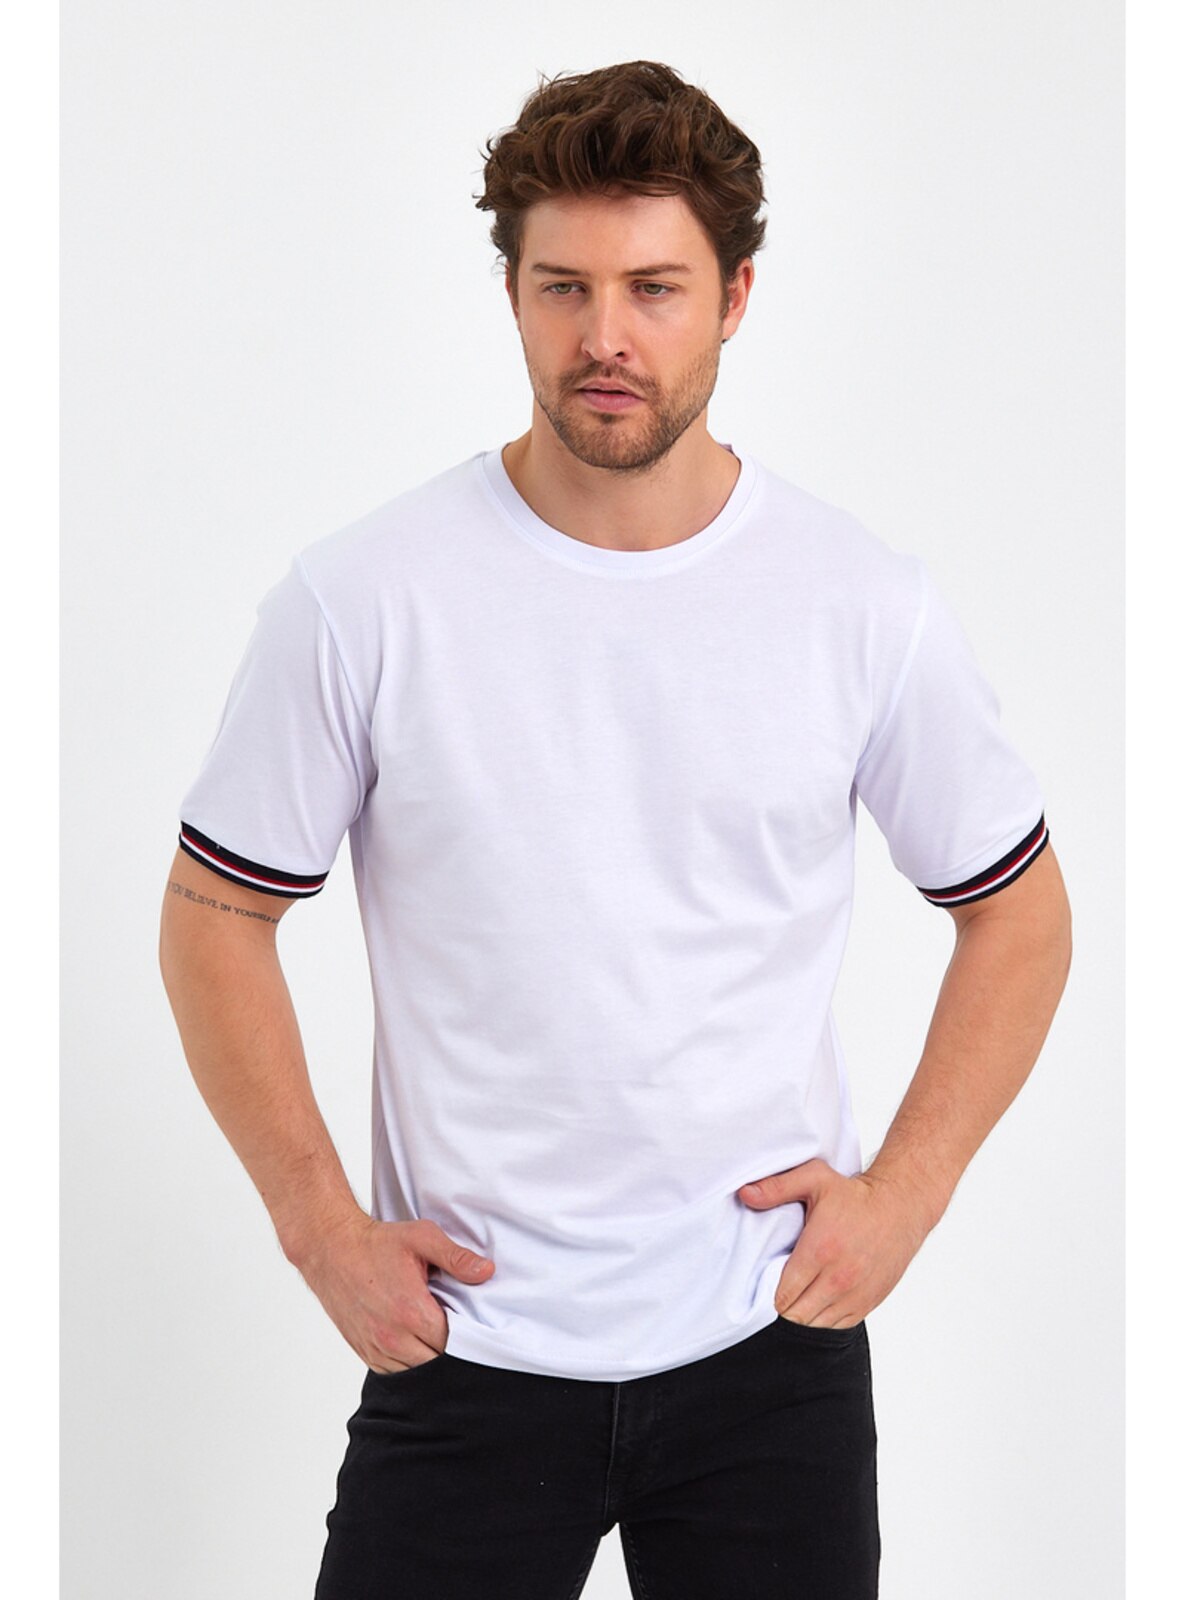 White - Crew neck - Men`s T-Shirts